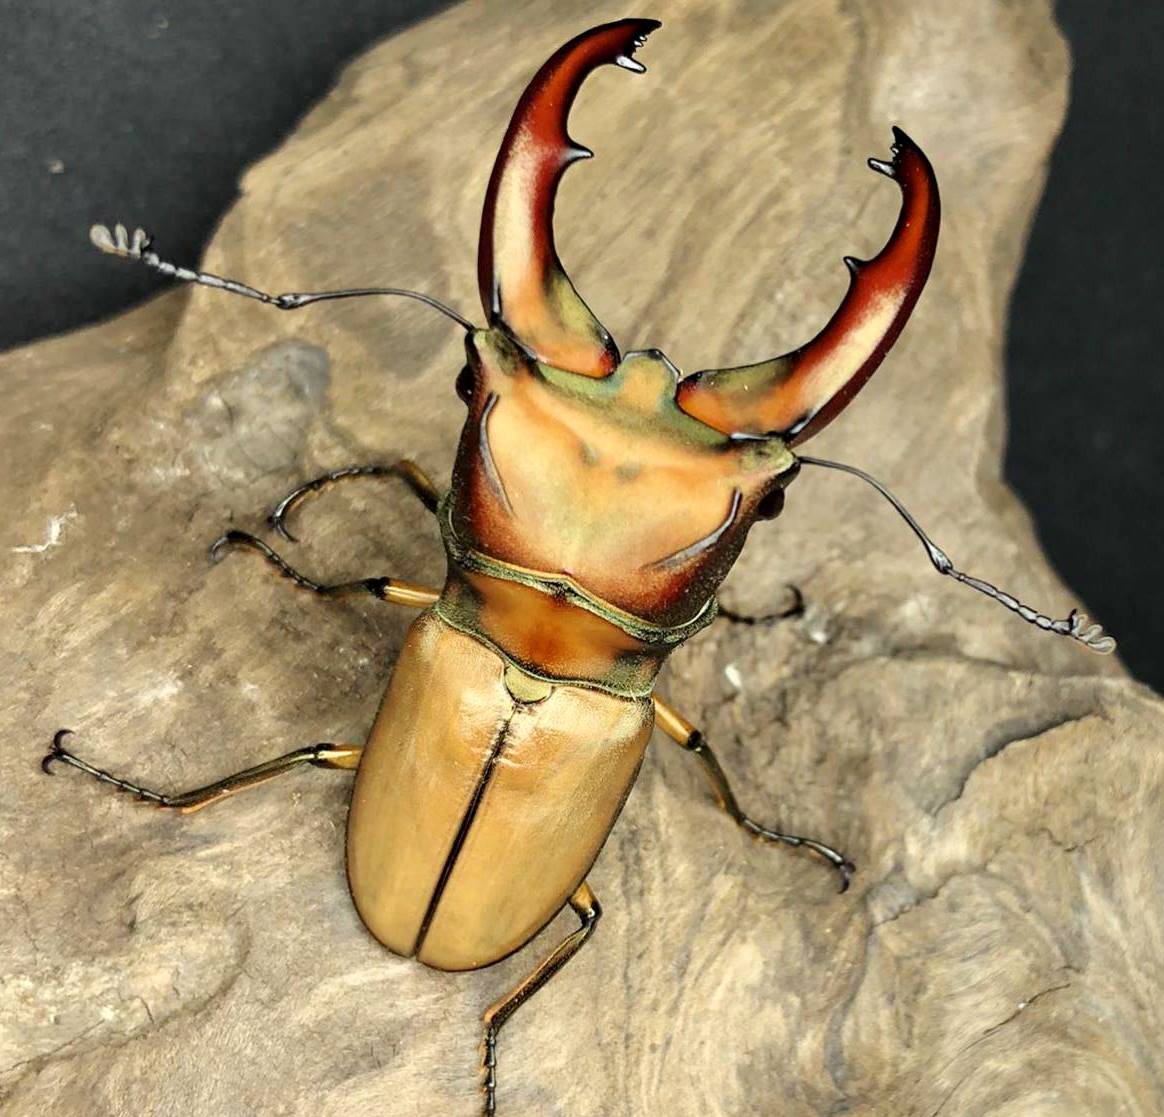 Larvae - Taiwanese Stag Beetle, (Cyclommatus mniszechi) - Richard’s Inverts